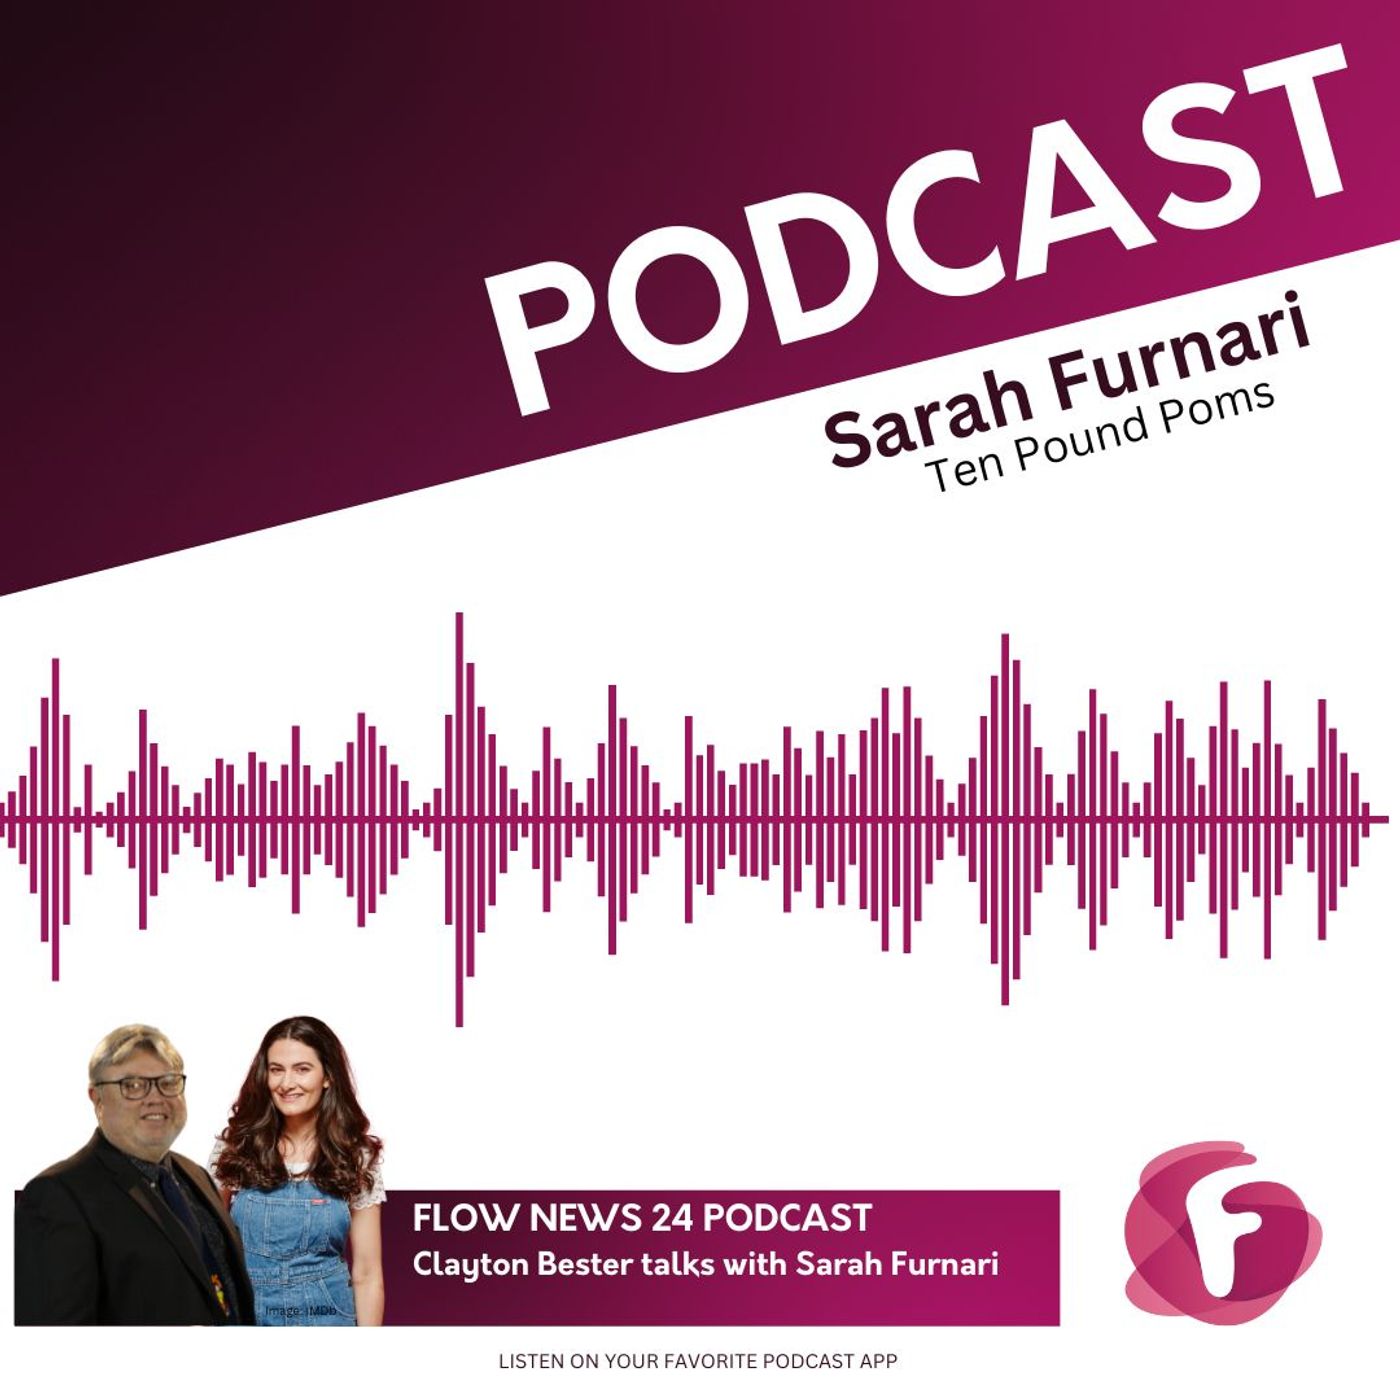 Clayton Bester talks with Sarah Furnari from Ten Pound Poms